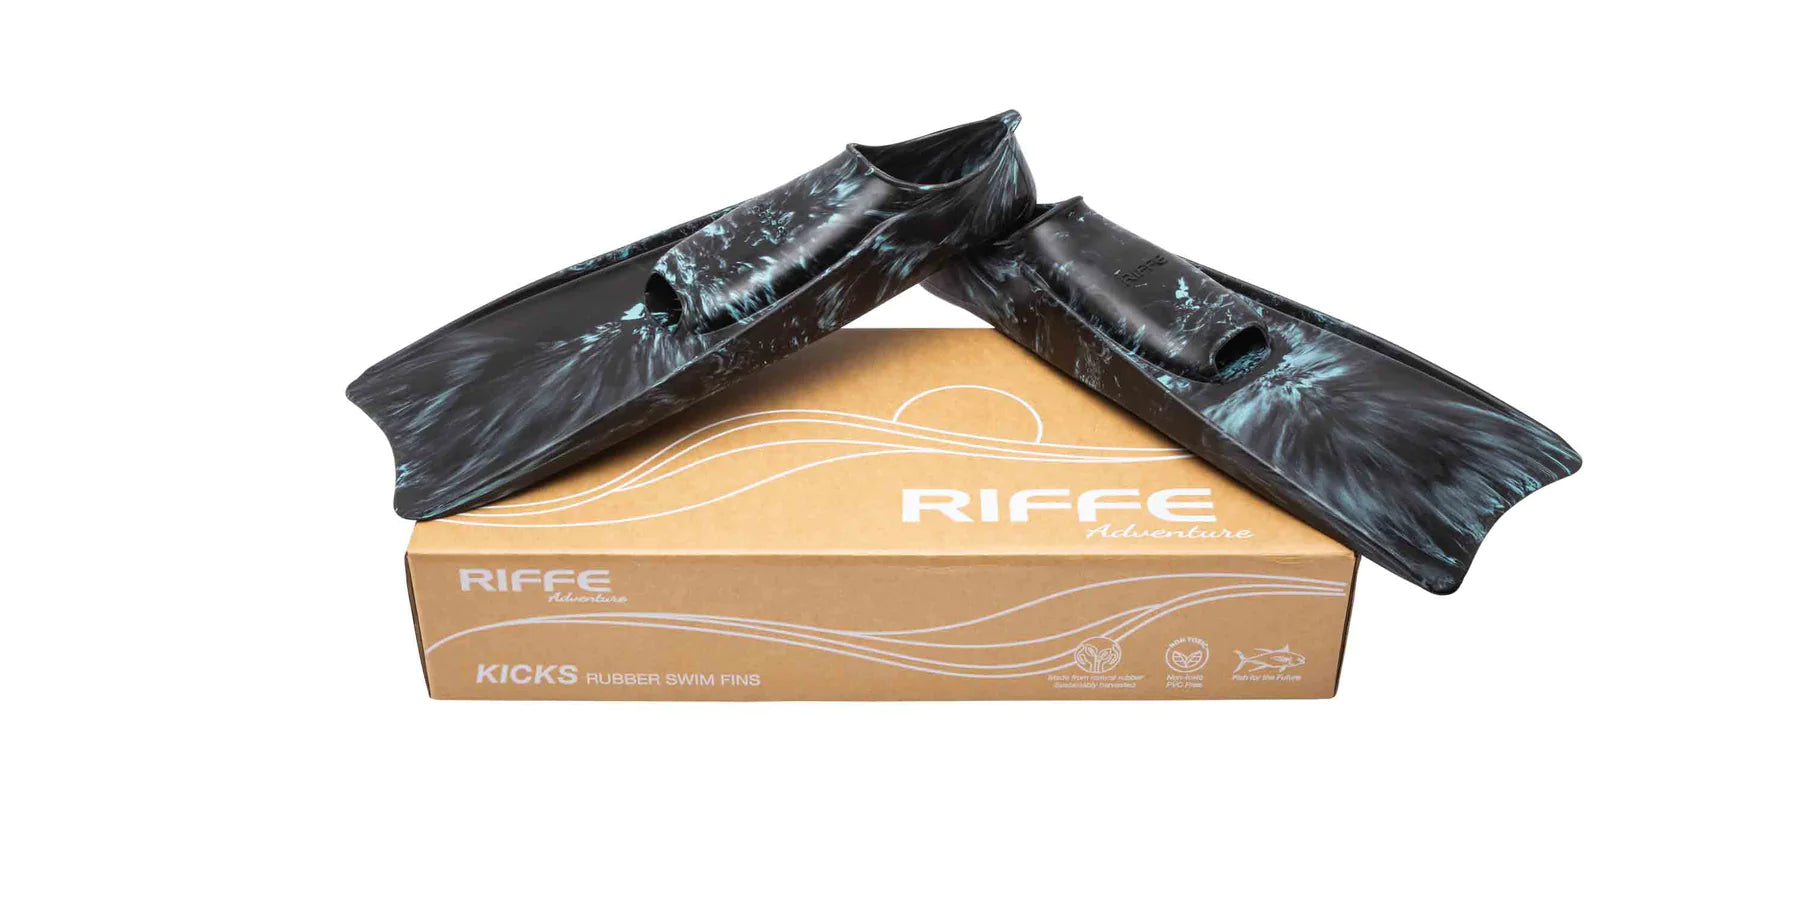 Riffe Kicks Rubber Swim Fin